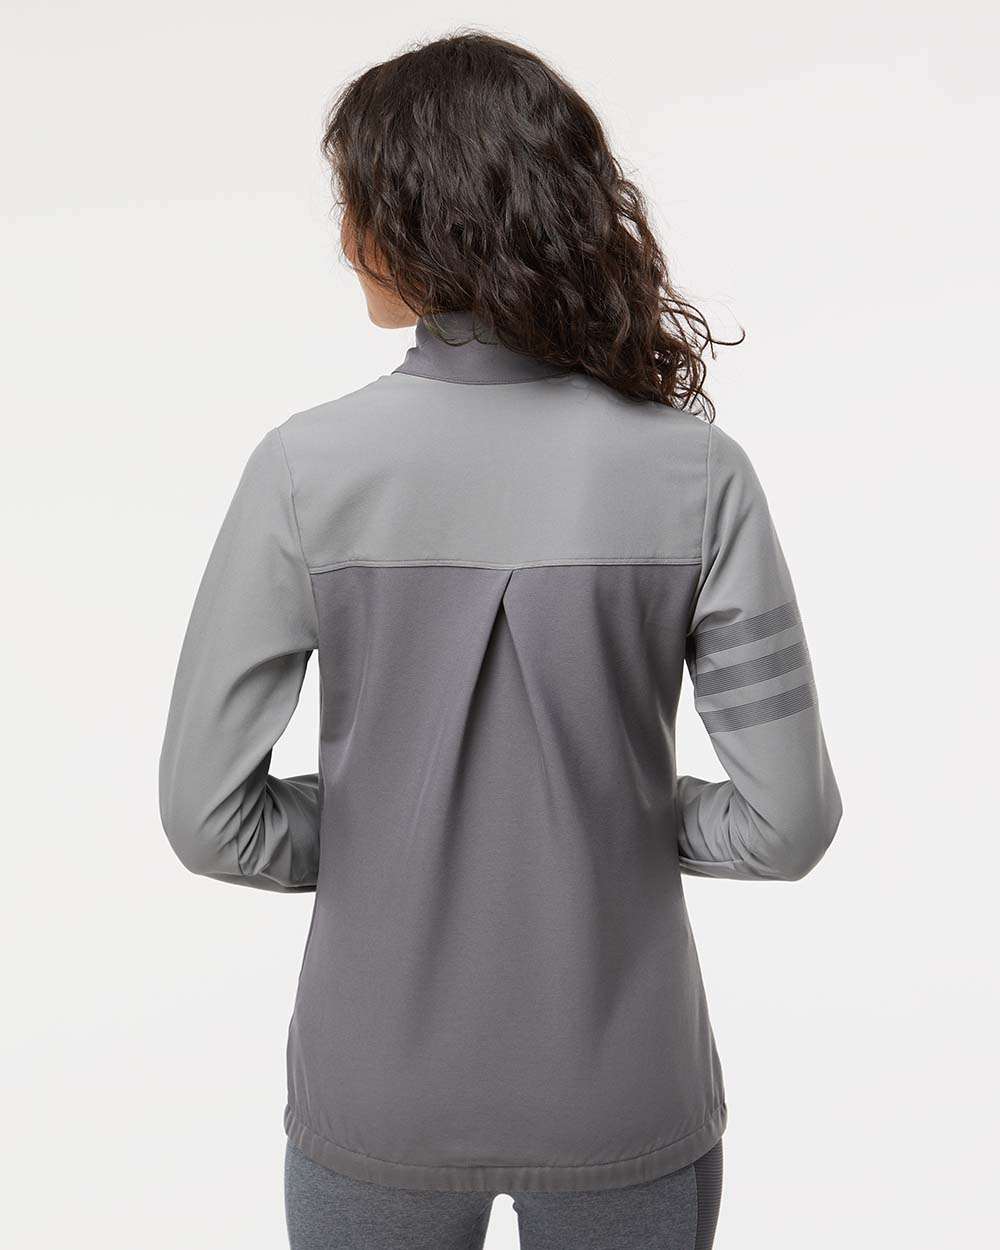 Adidas Women's 3-Stripes Full-Zip Jacket #A268 Grey Back